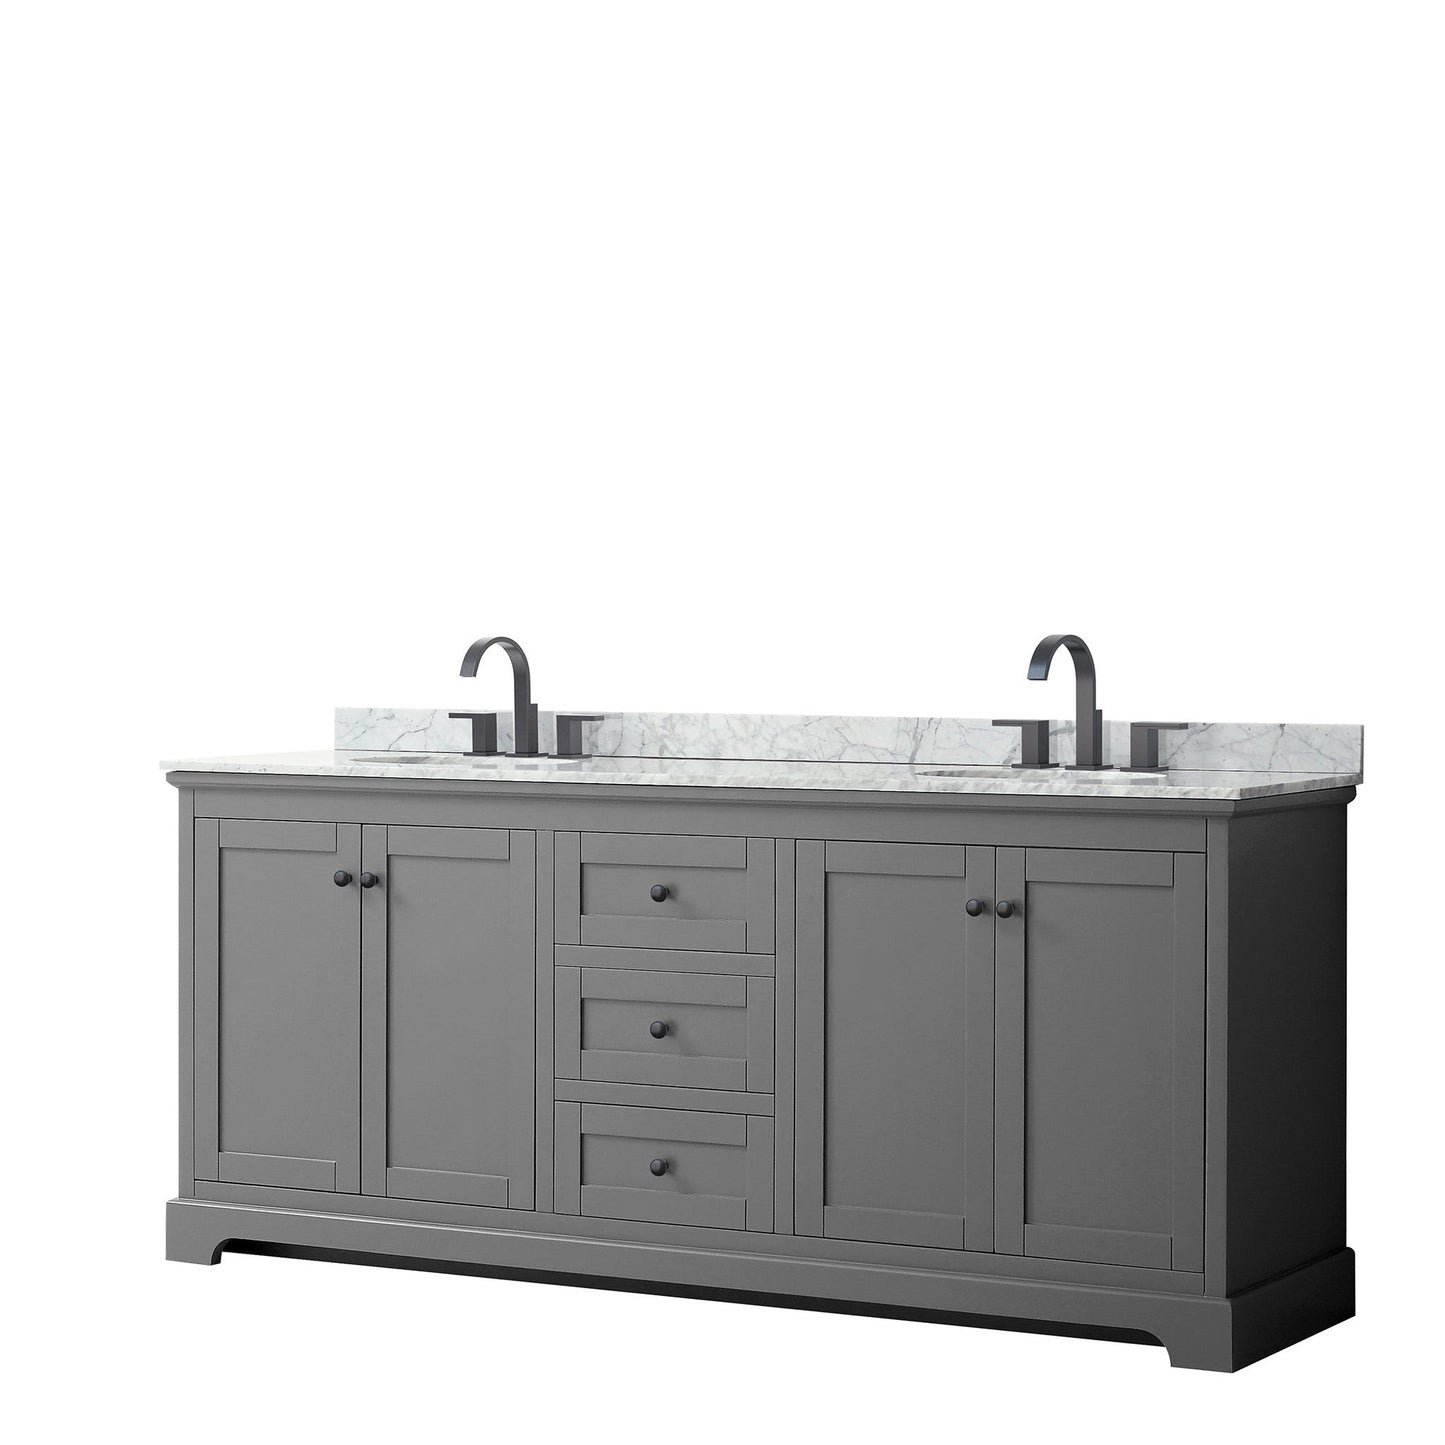 Avery 80" Double Bathroom Vanity in Dark Gray, White Carrara Marble Countertop, Undermount Oval Sinks, Matte Black Trim